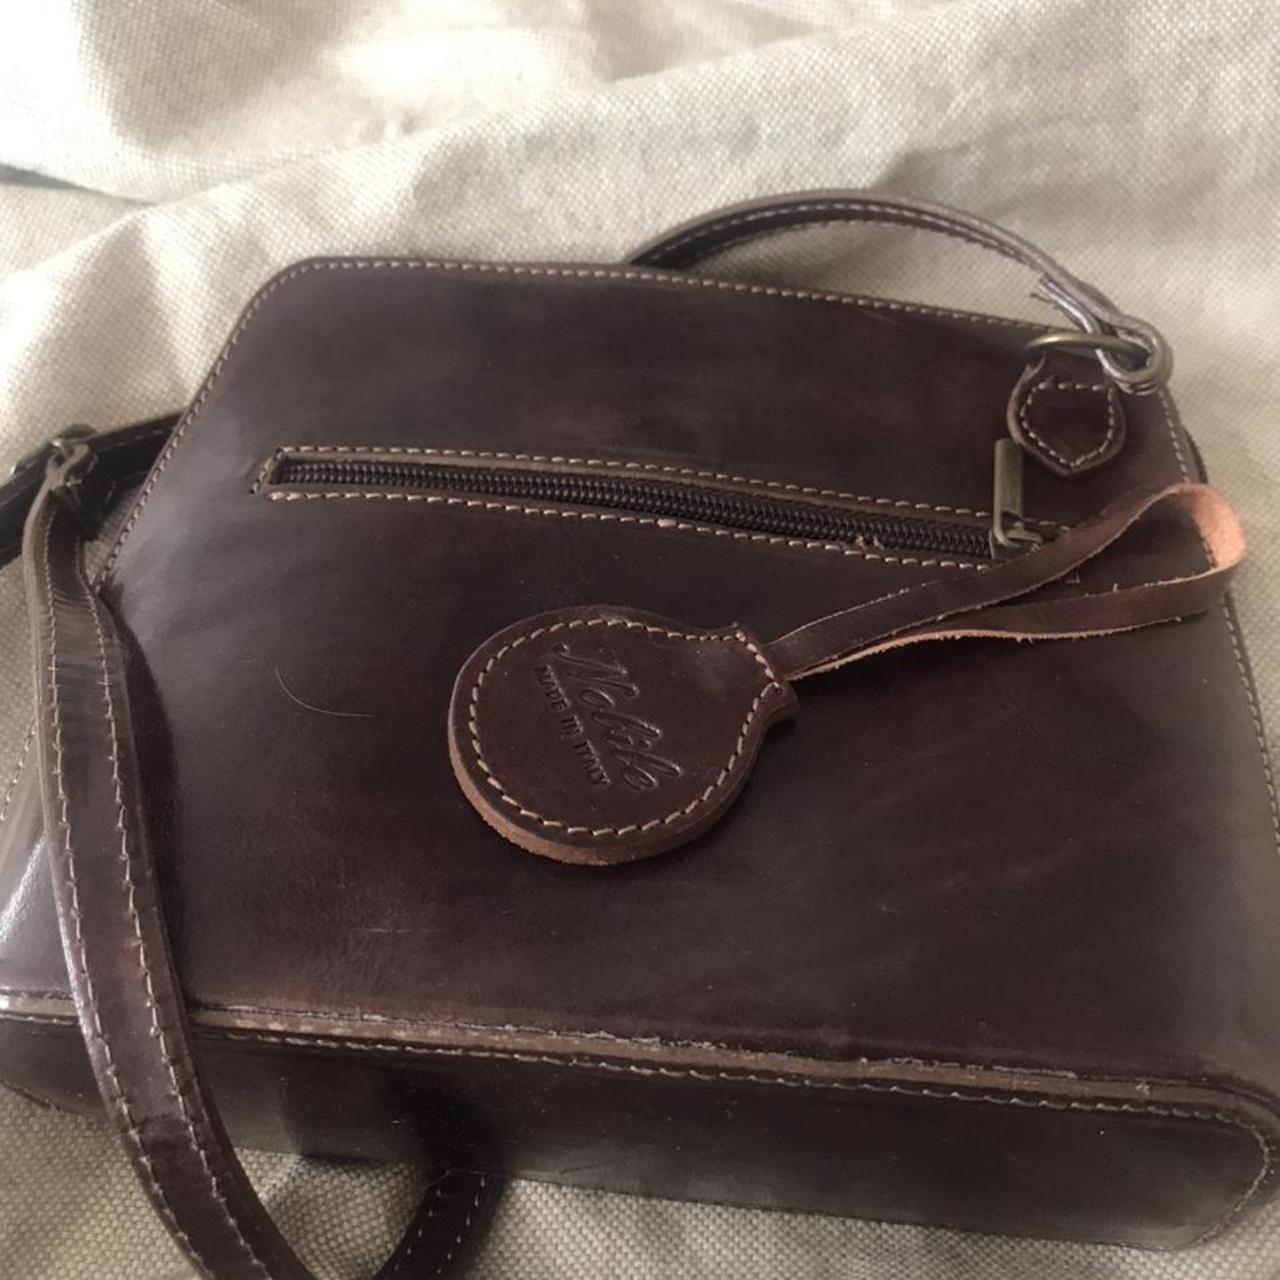 Product Image 1 - Amazing Italian leather bag that